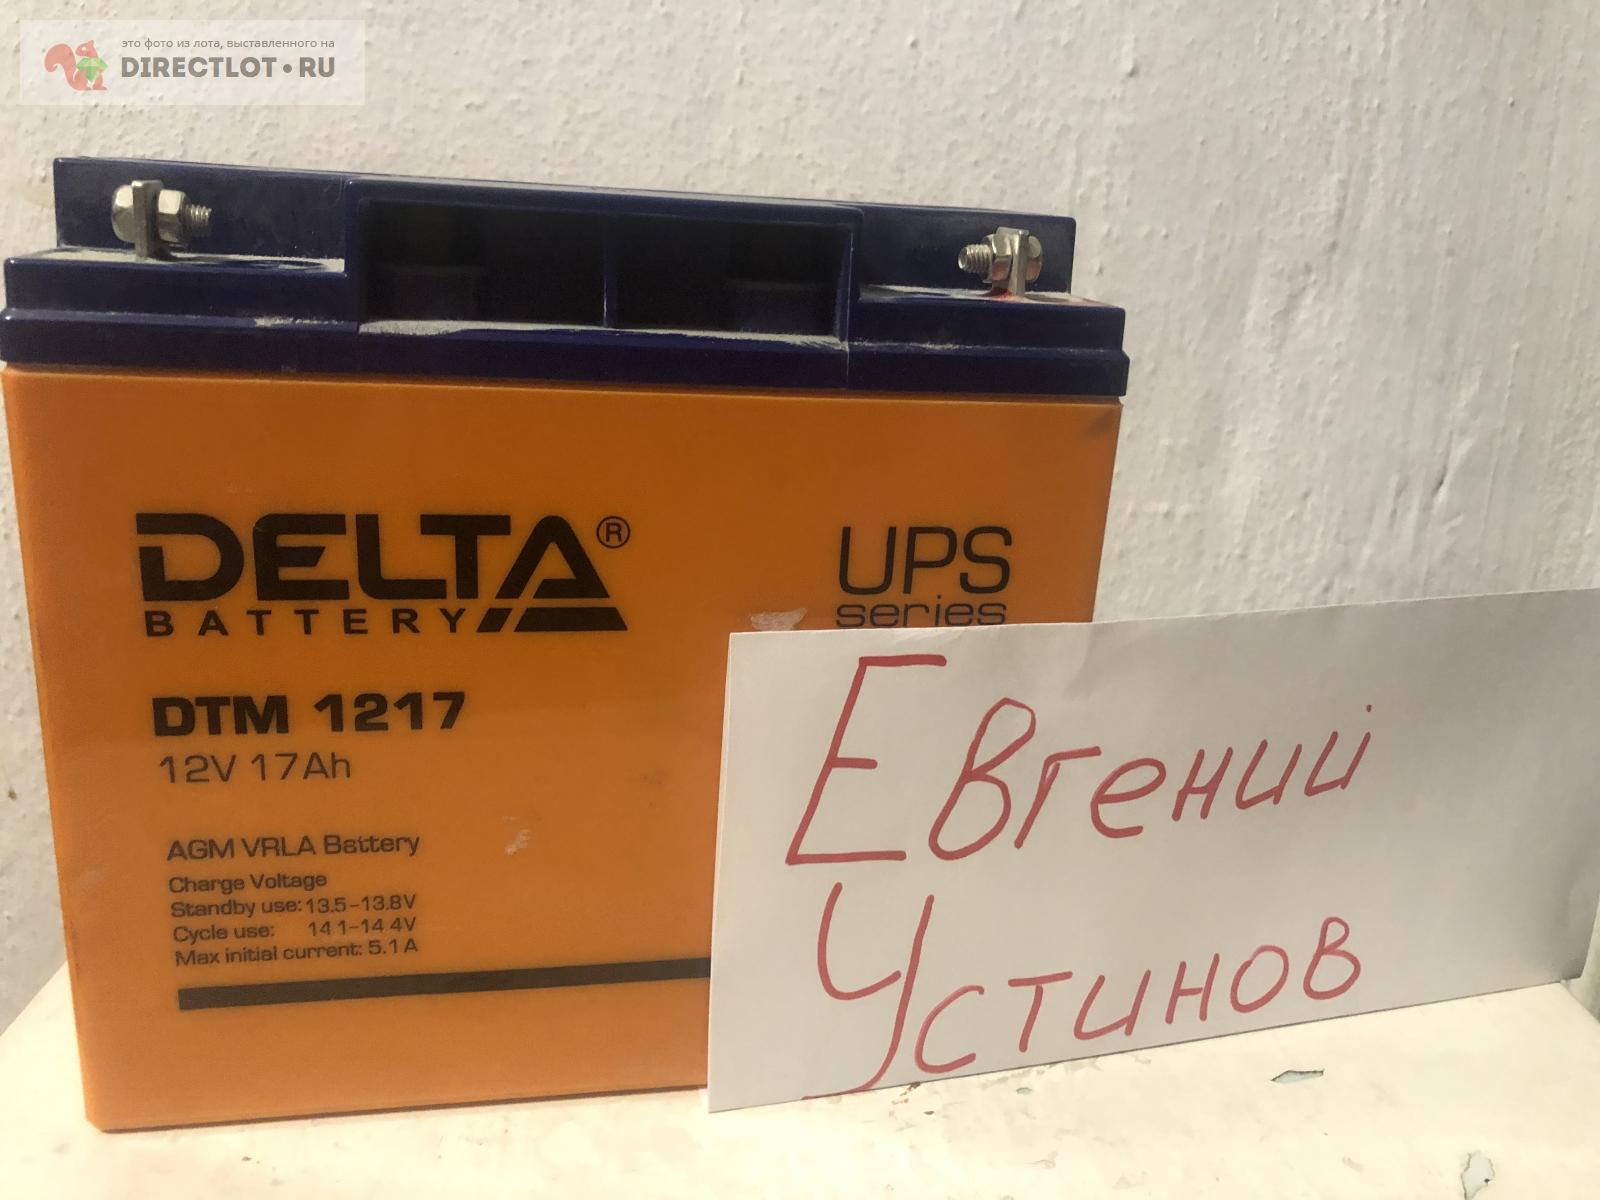 Продам  батарея Delta DTM 1217 (12V / 17Ah)  на .